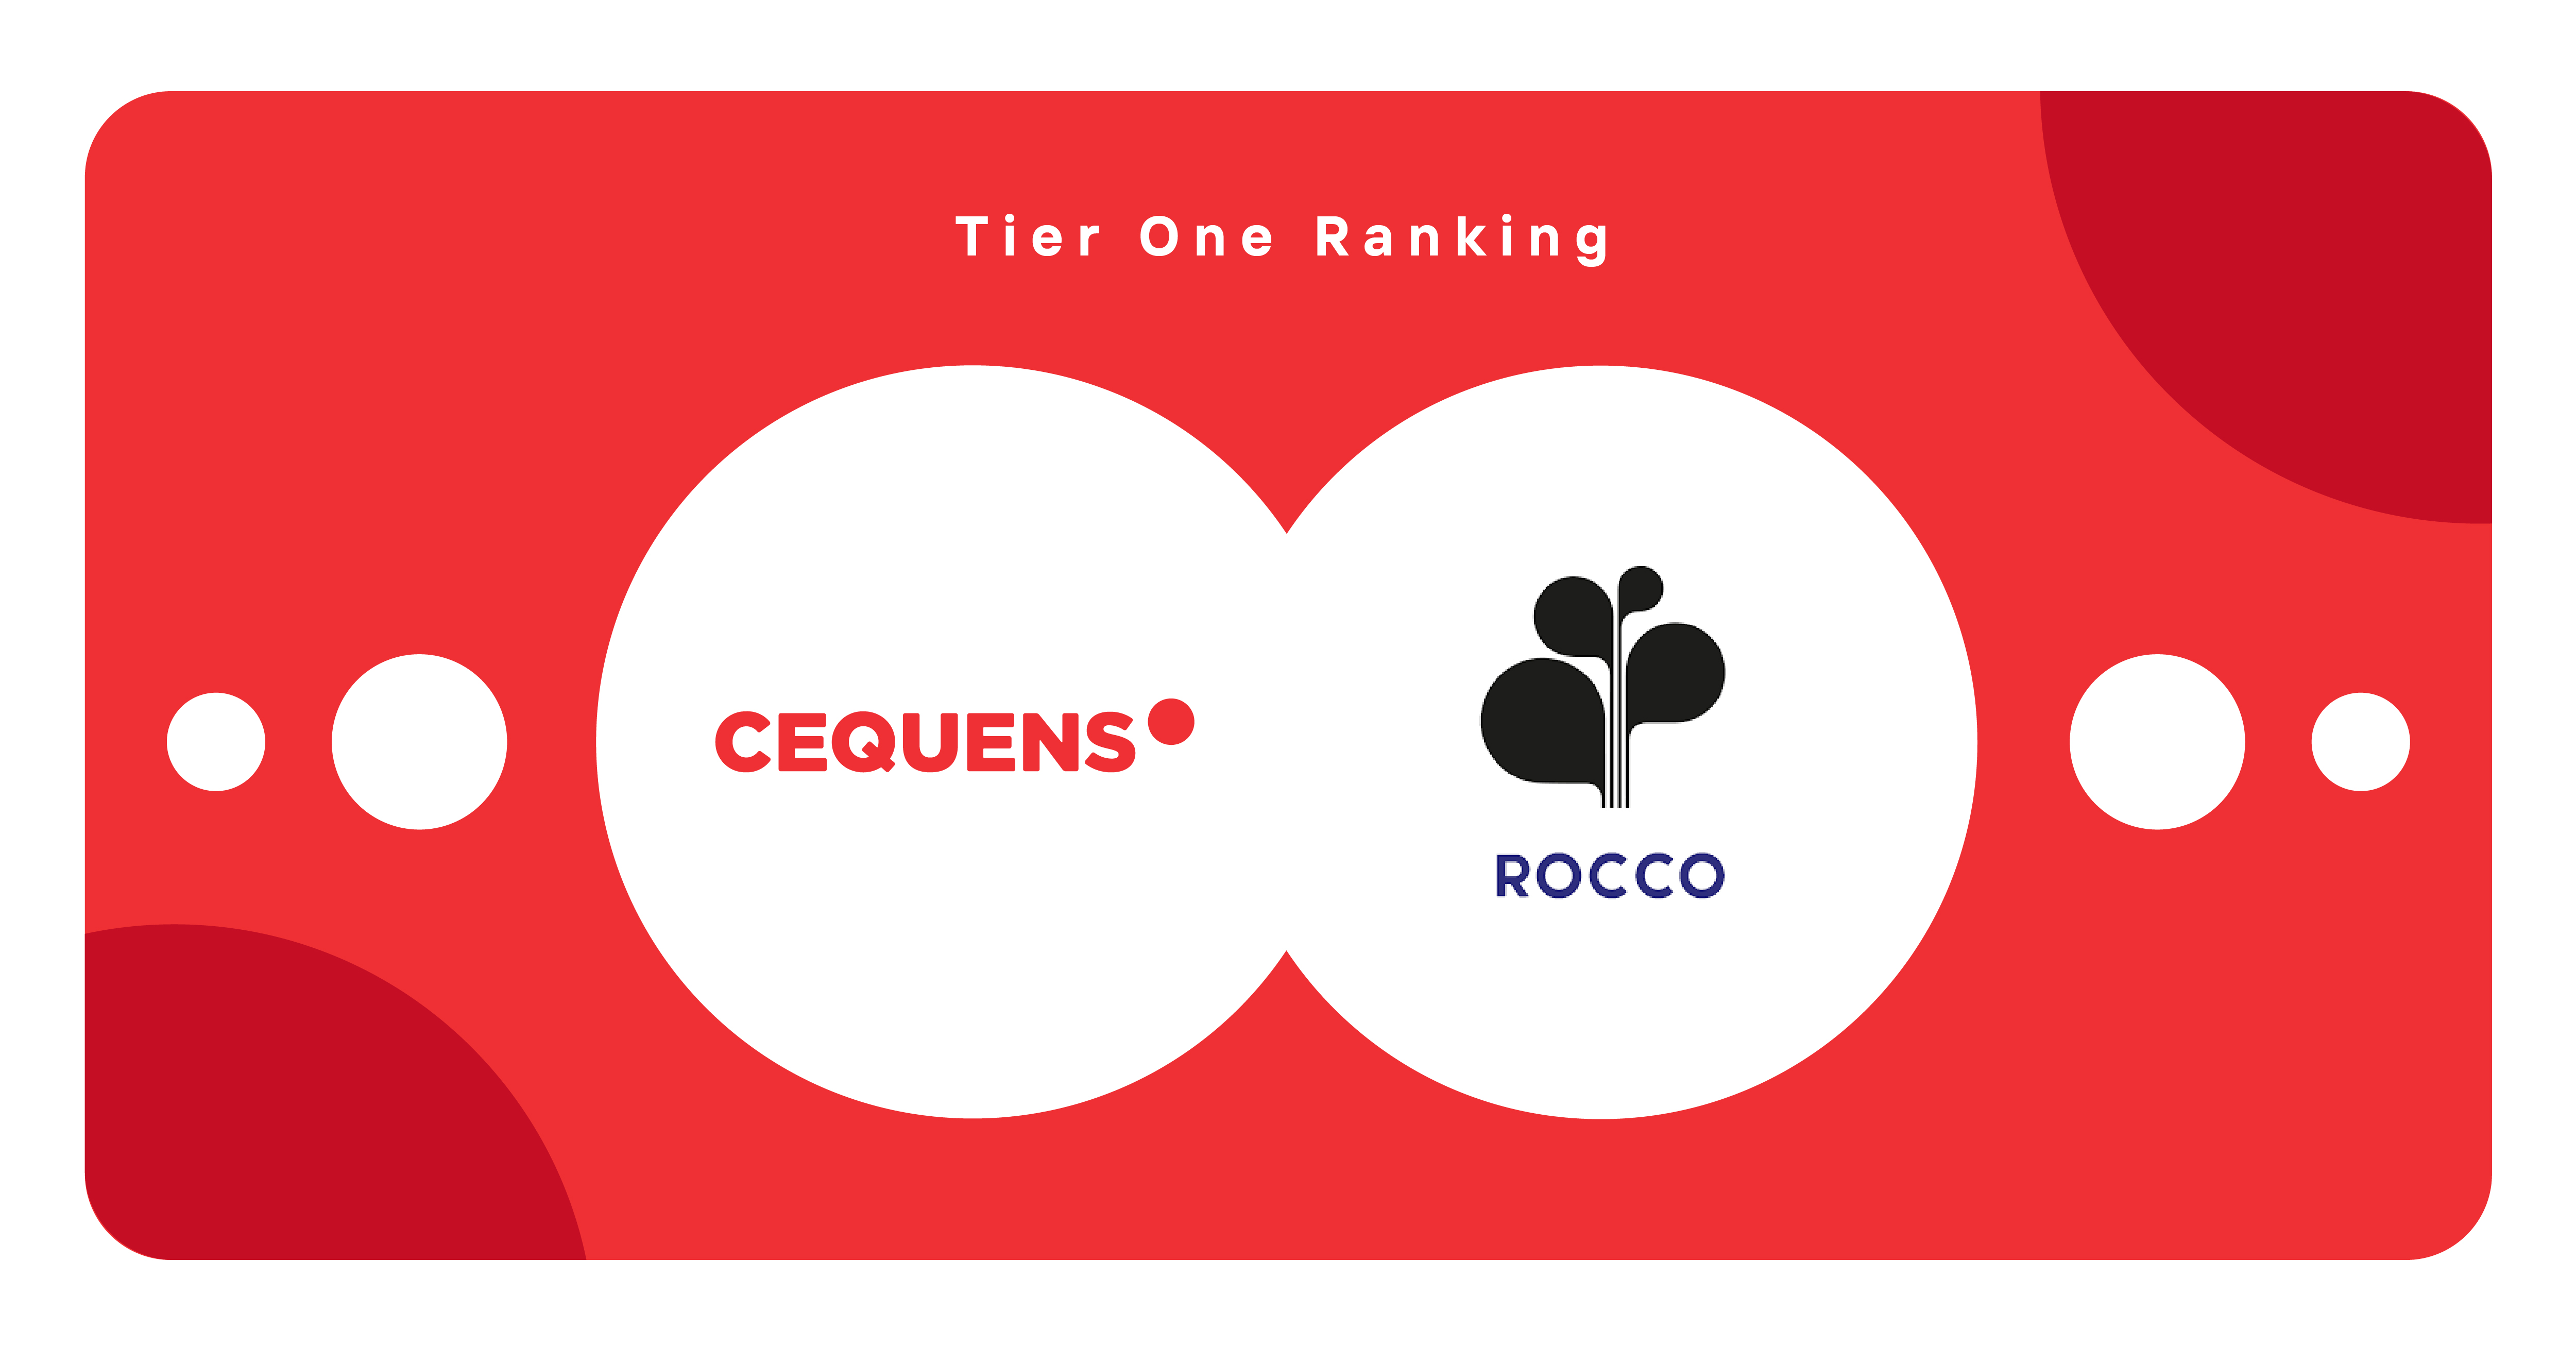 CEQUENS and Rocco logos